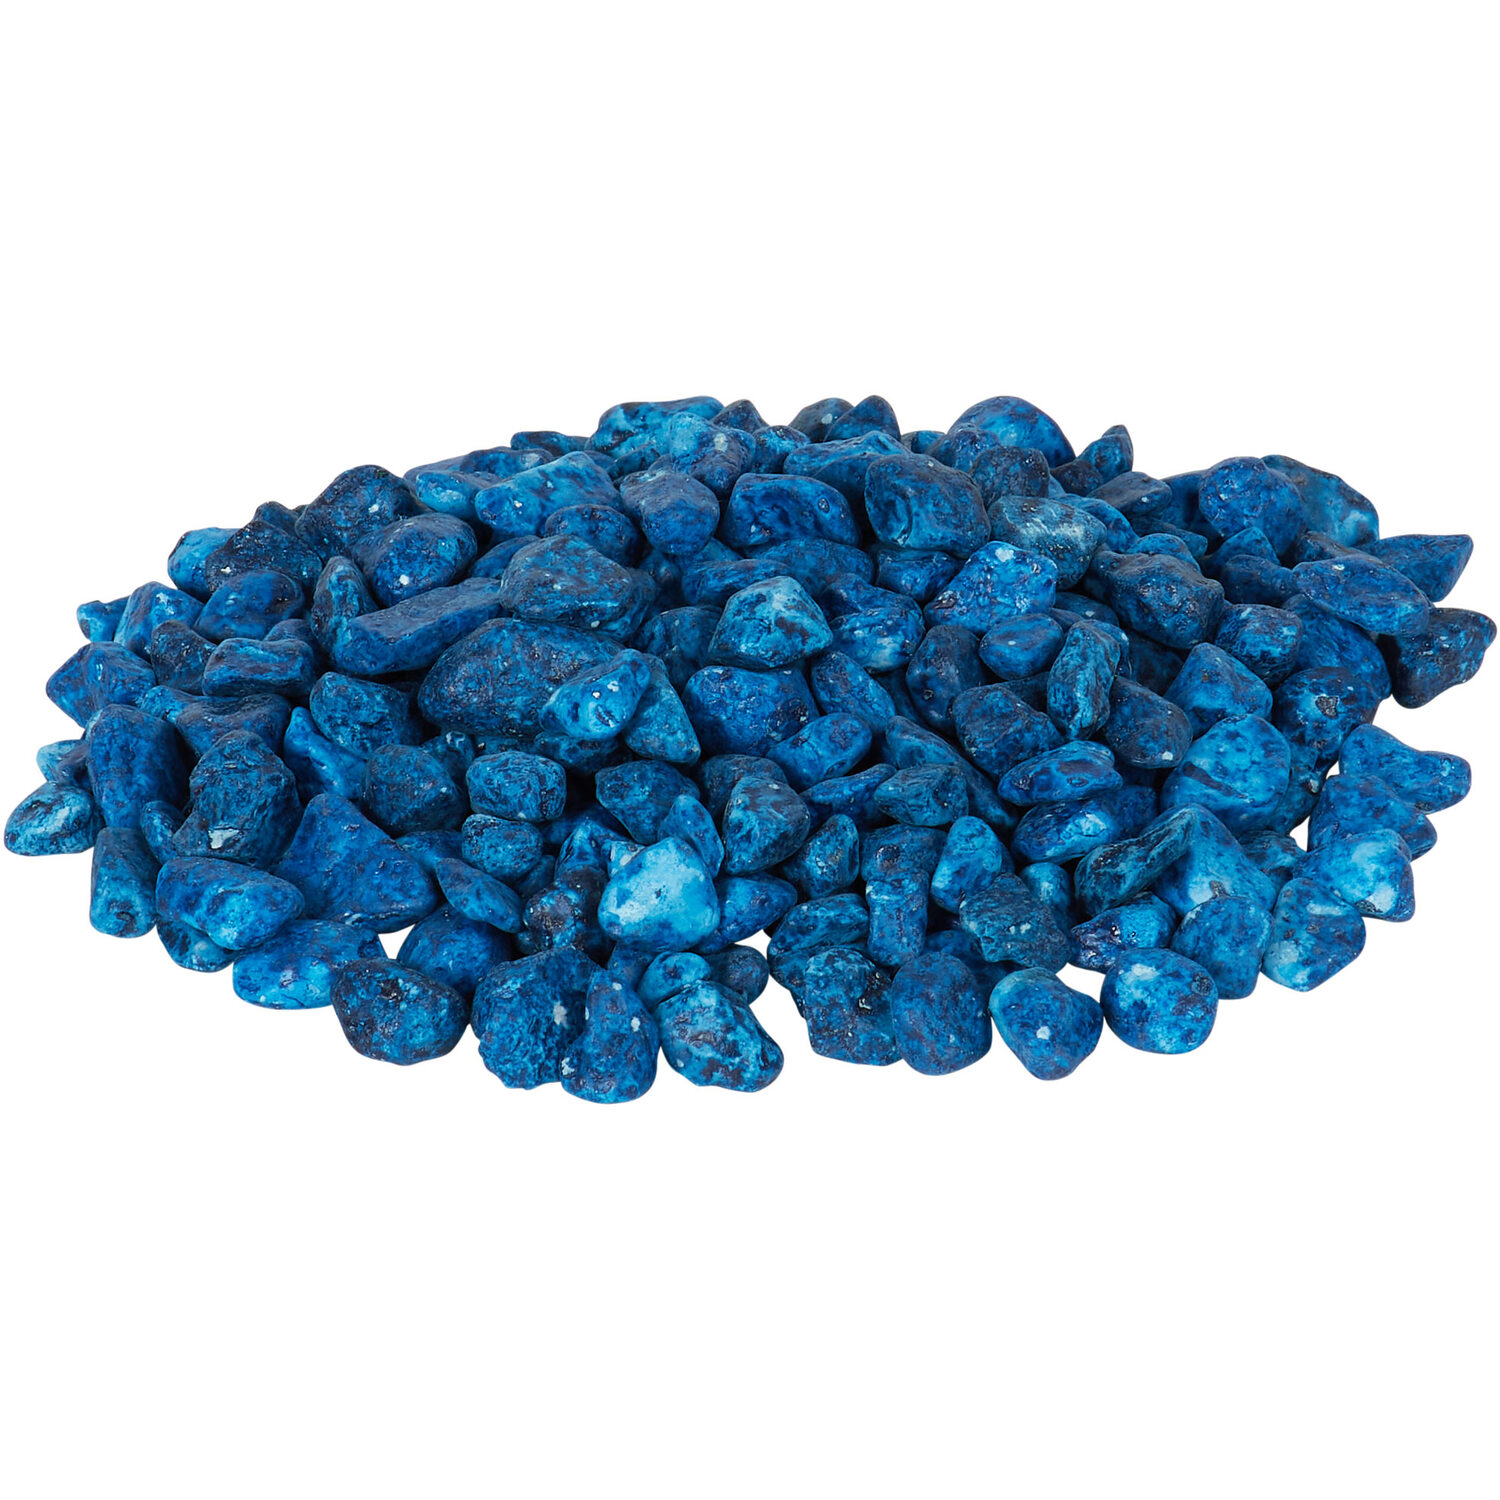 Fish Tank Gravel - Blue Image 1